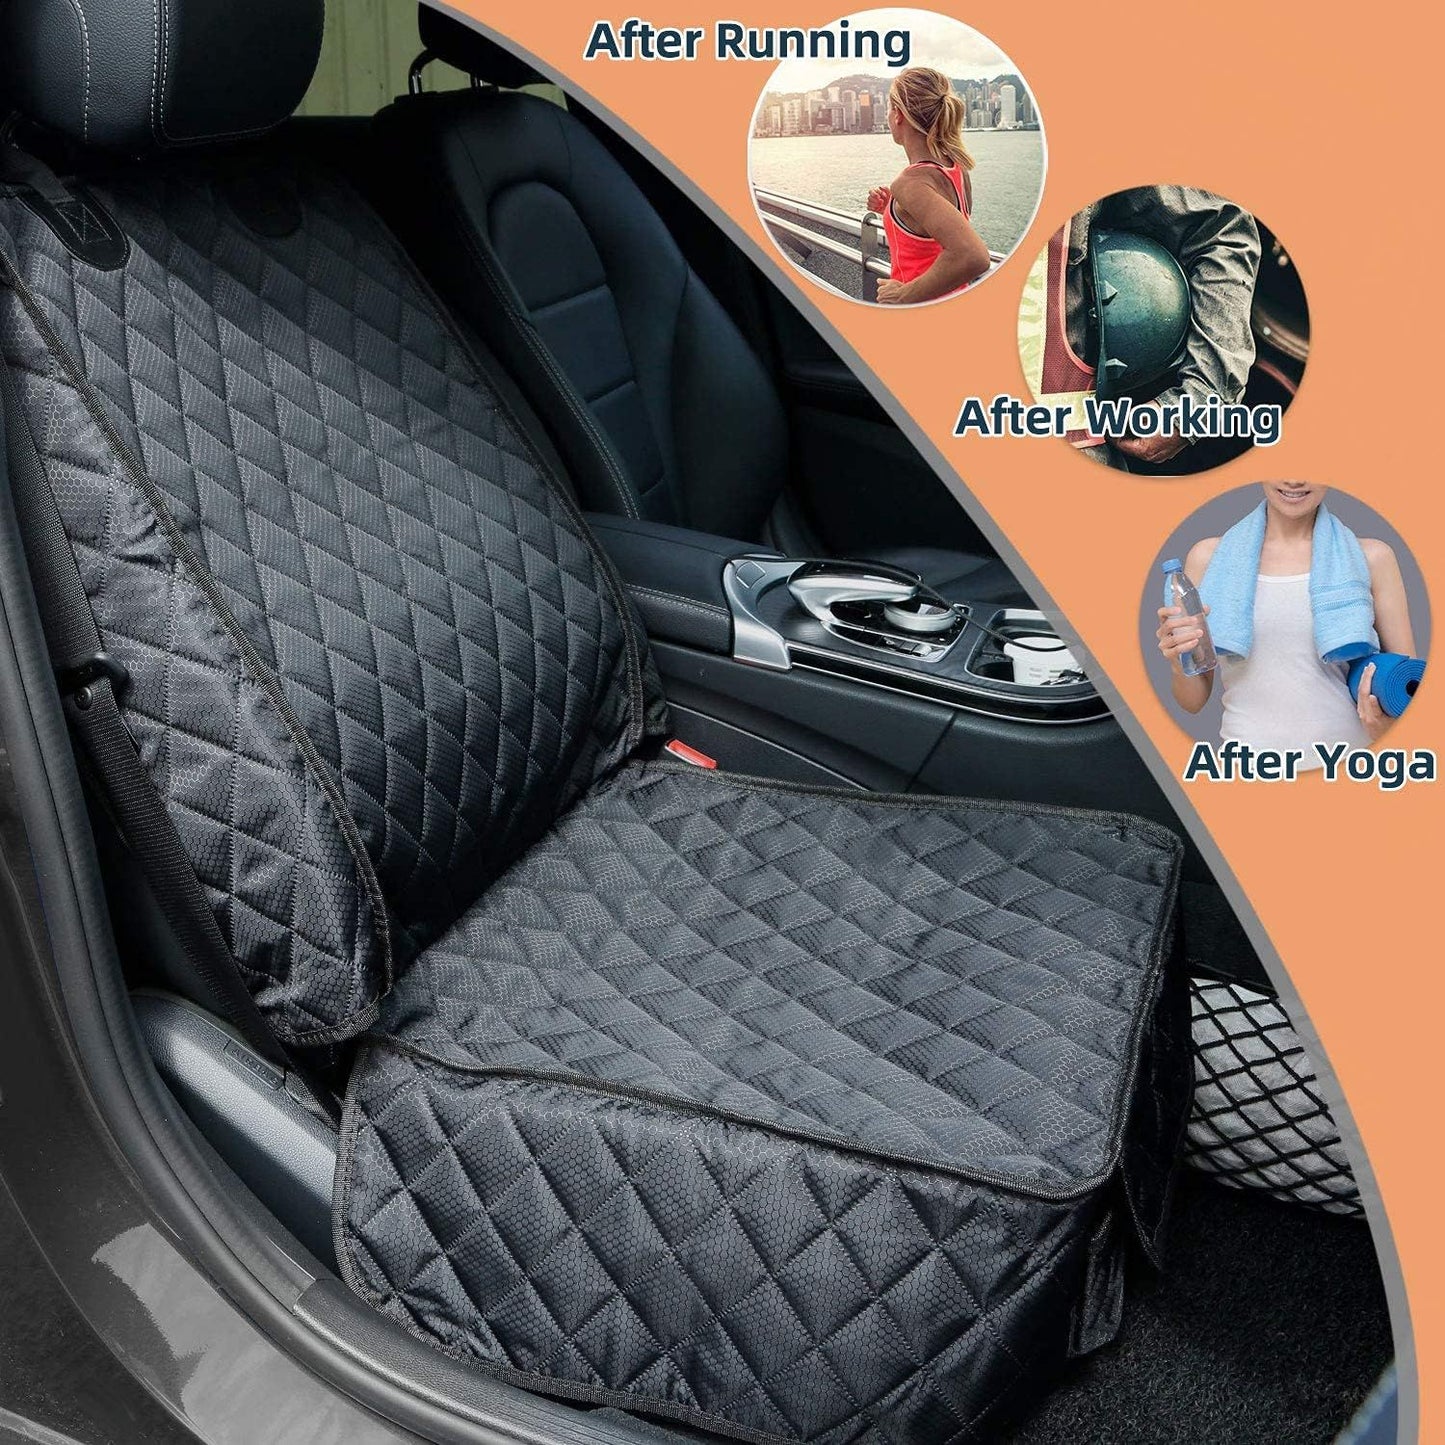 New Peticon Beige Dog Car Seat Cover Model PT4002-2 Waterproof-Anti-Scratch